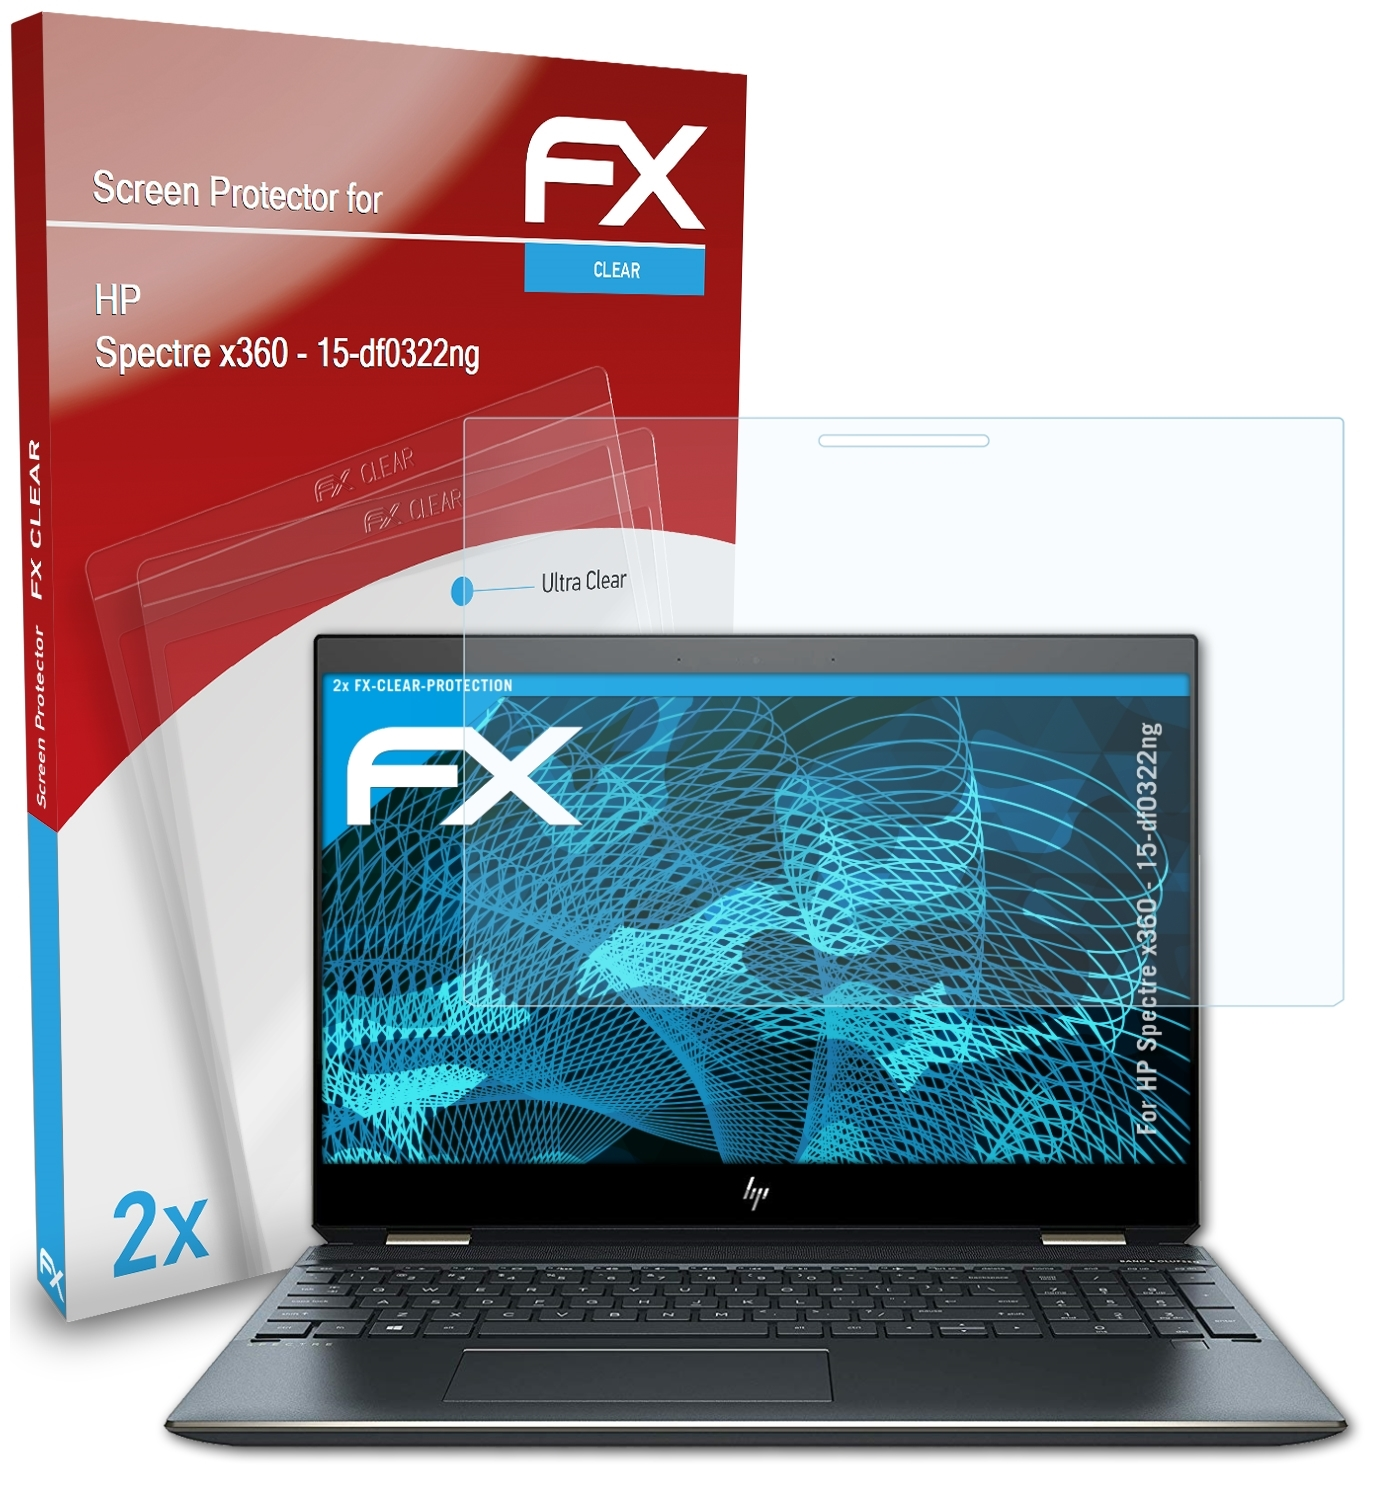 15-df0322ng) 2x x360 Displayschutz(für Spectre HP FX-Clear ATFOLIX -